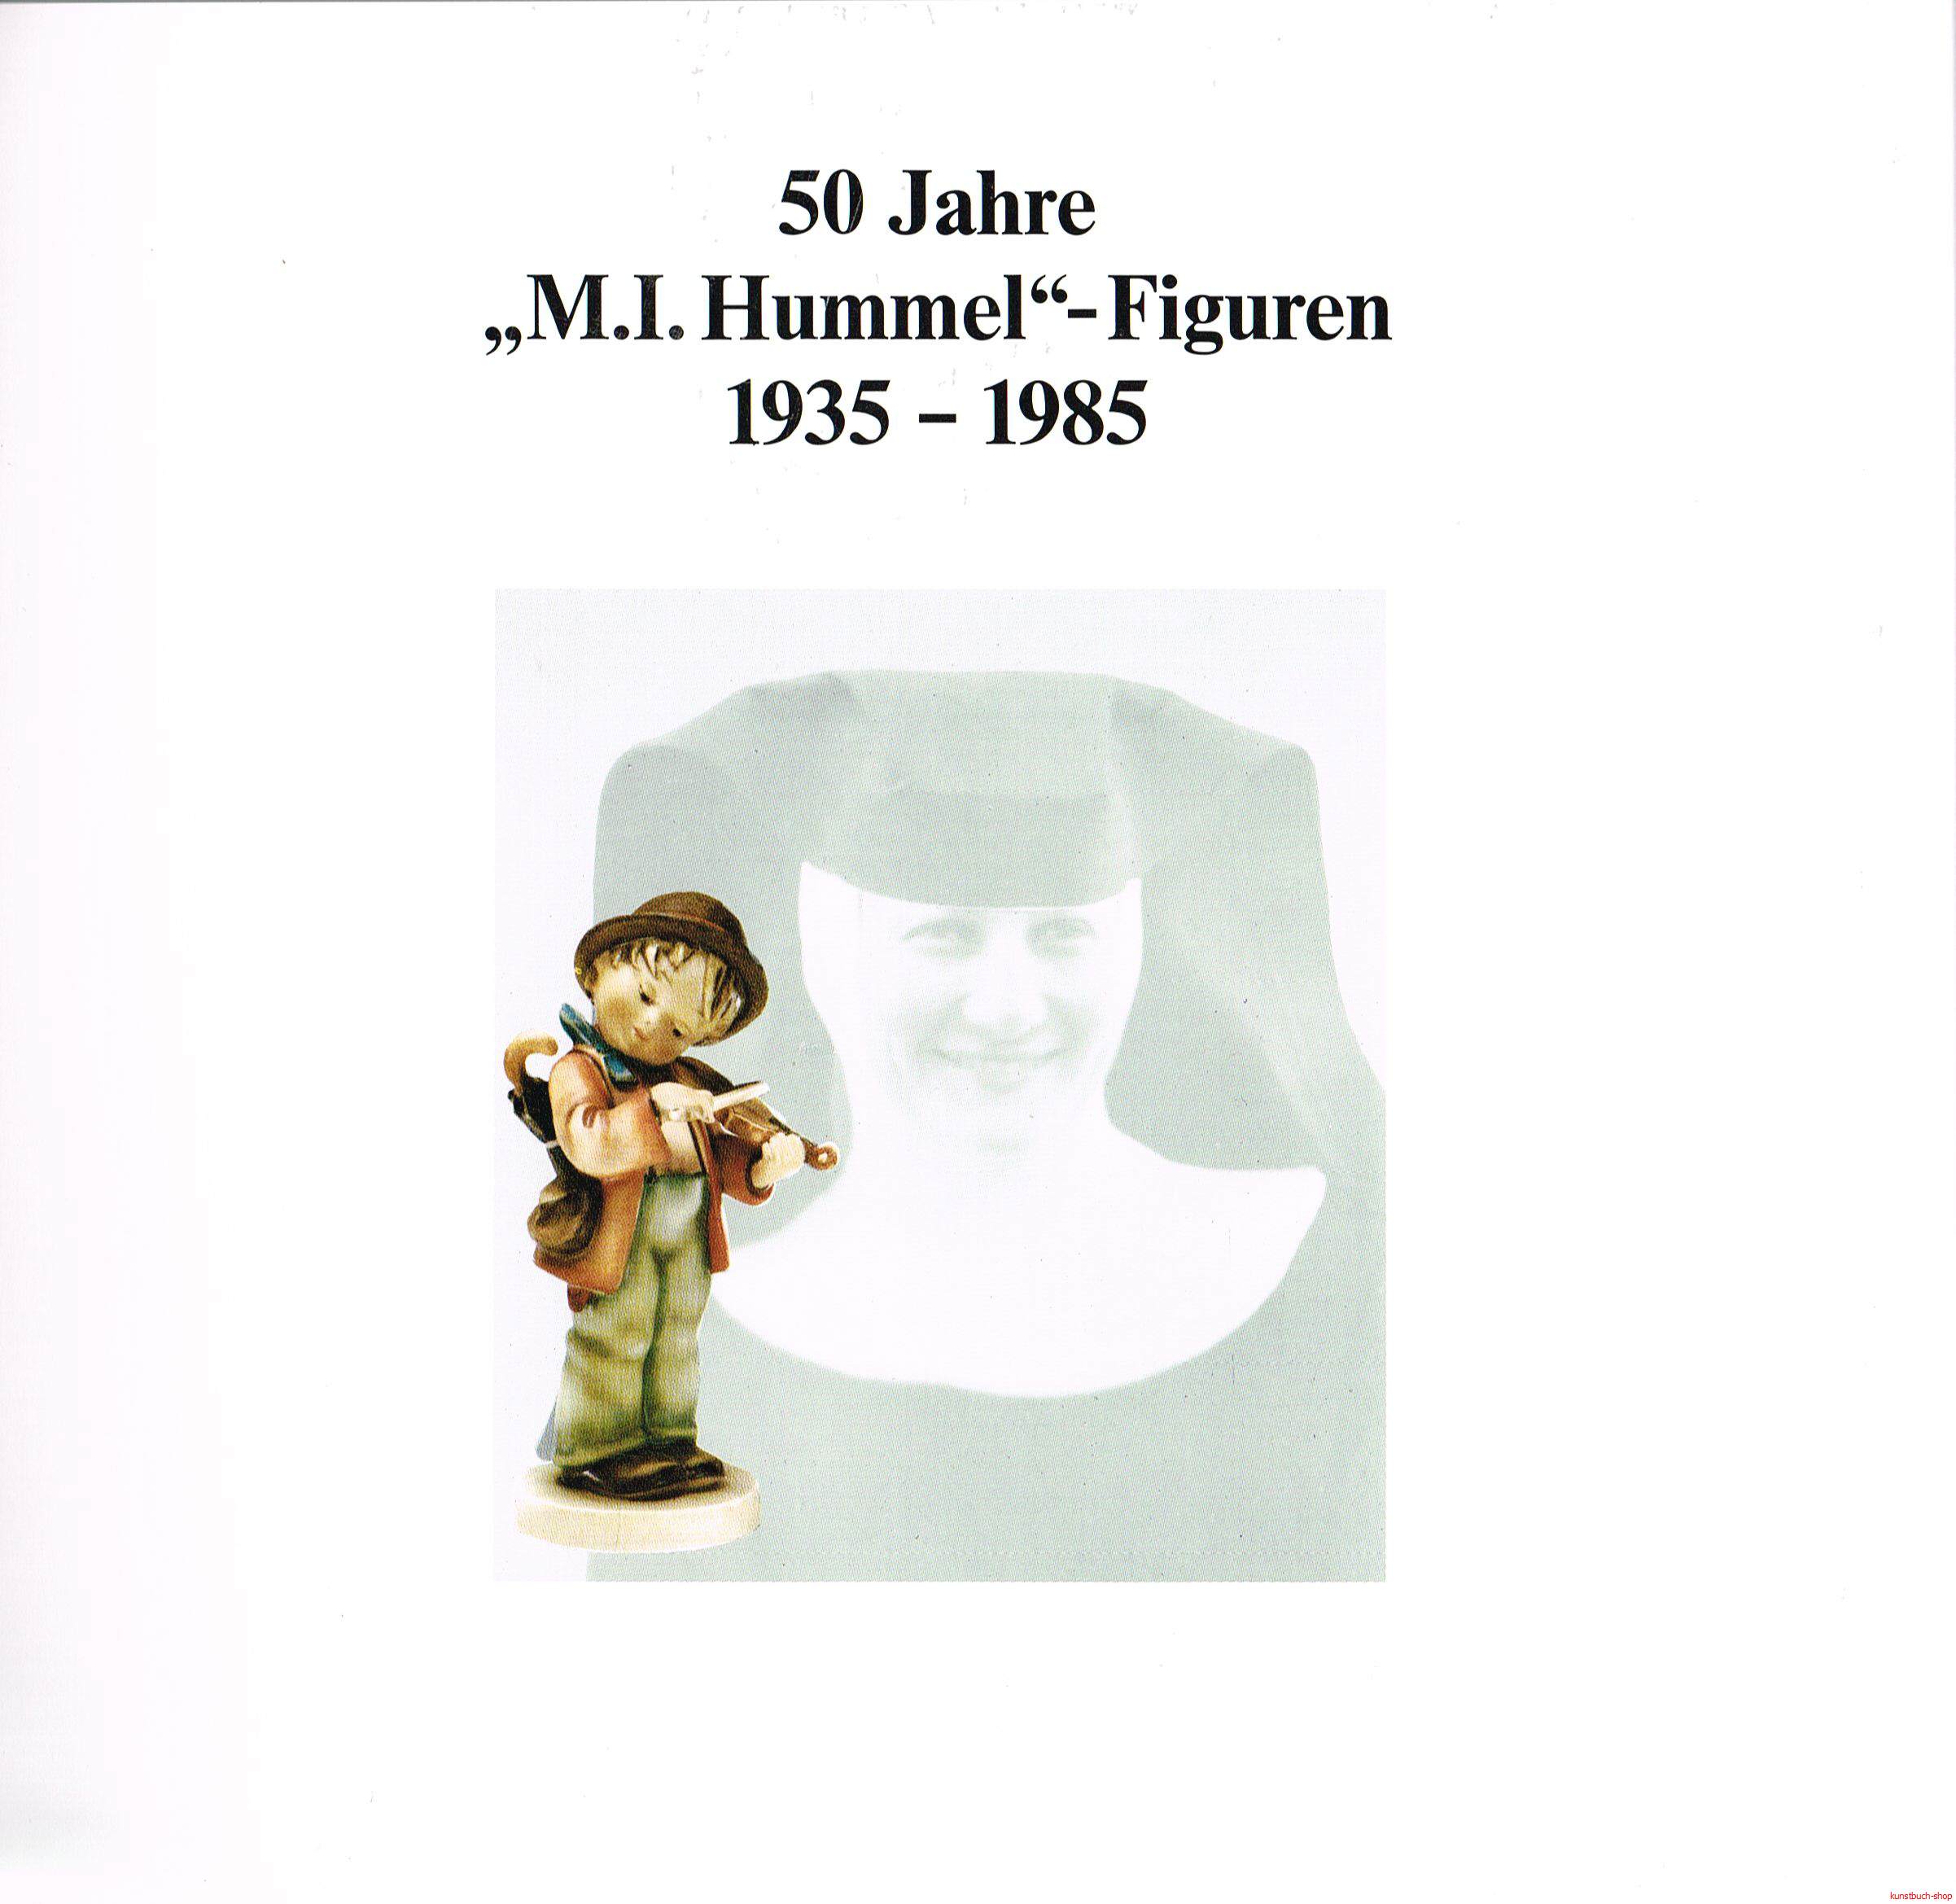 50 Jahre "M. I. Hummel"-Figuren 1935-1985